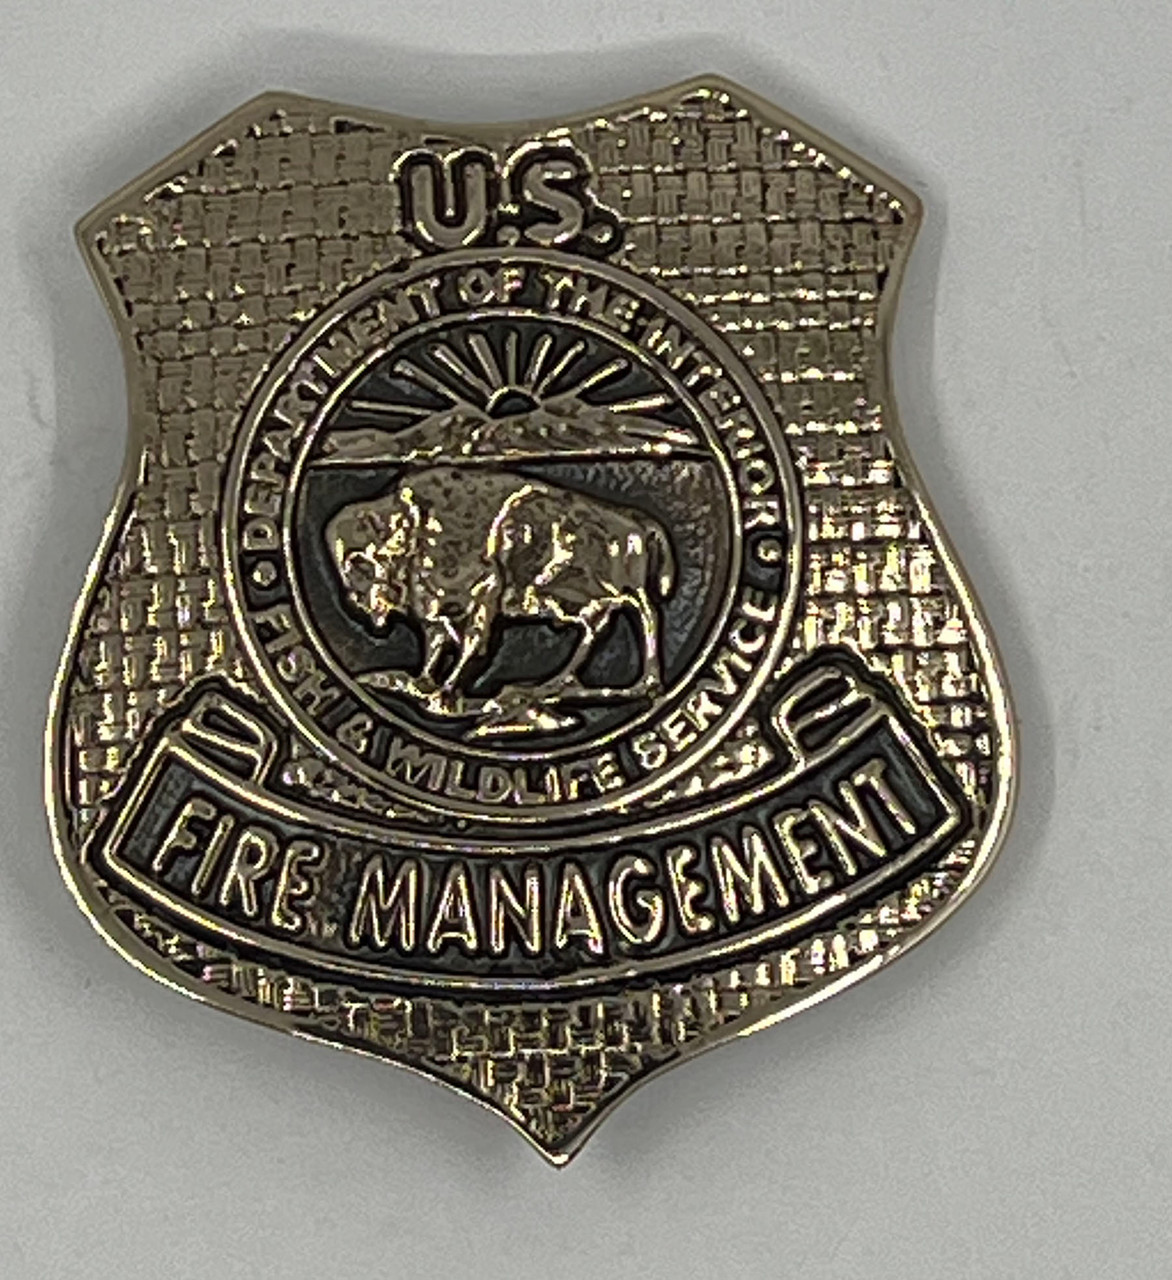 Fish & Wildlife Service Fire Management Badge